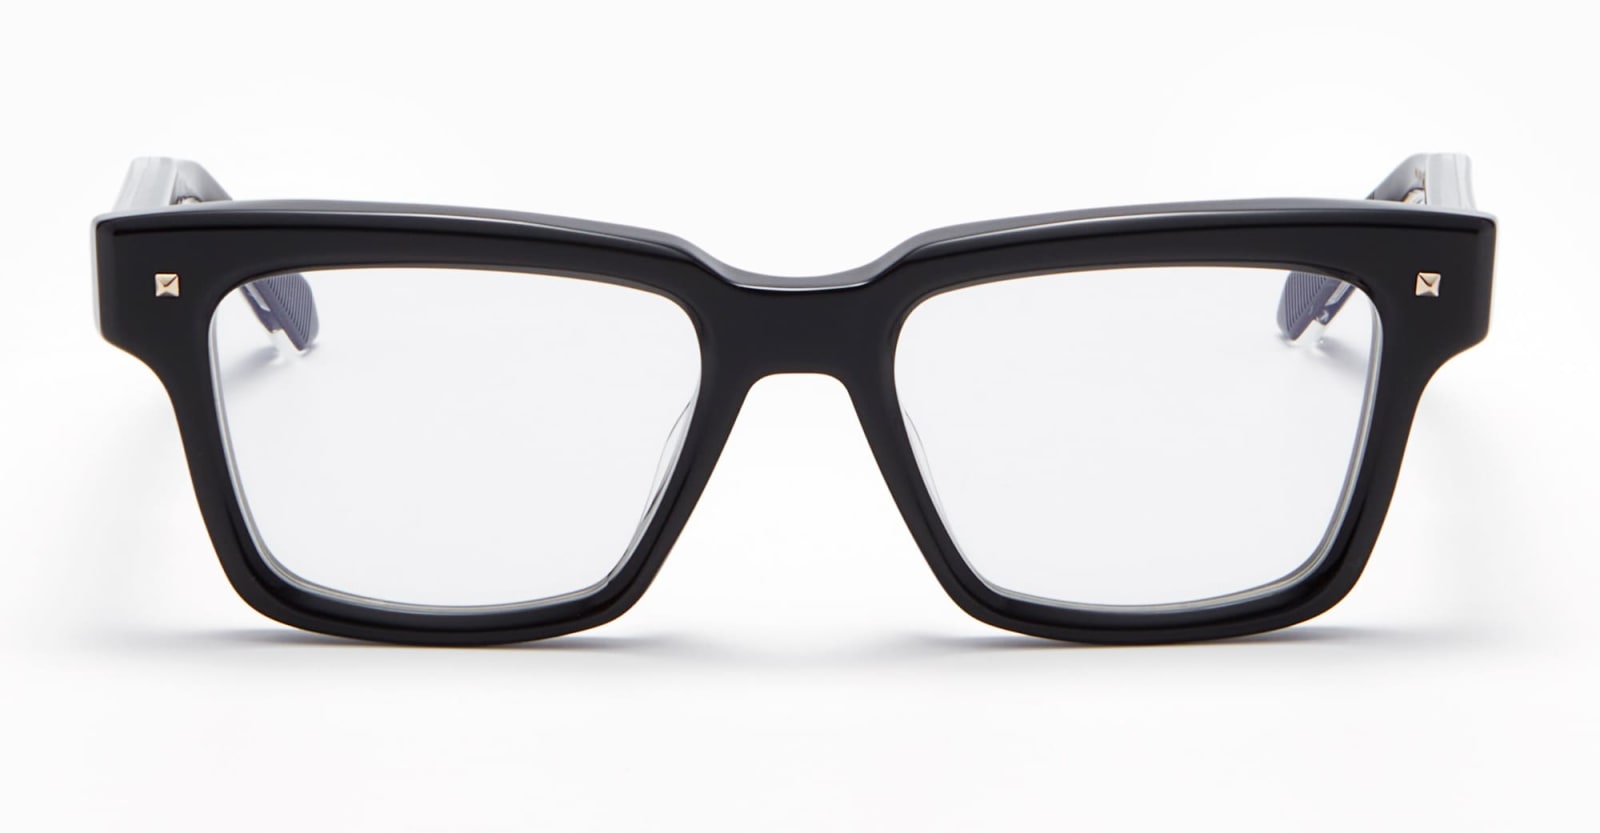 V-essential I - Black Rx Glasses